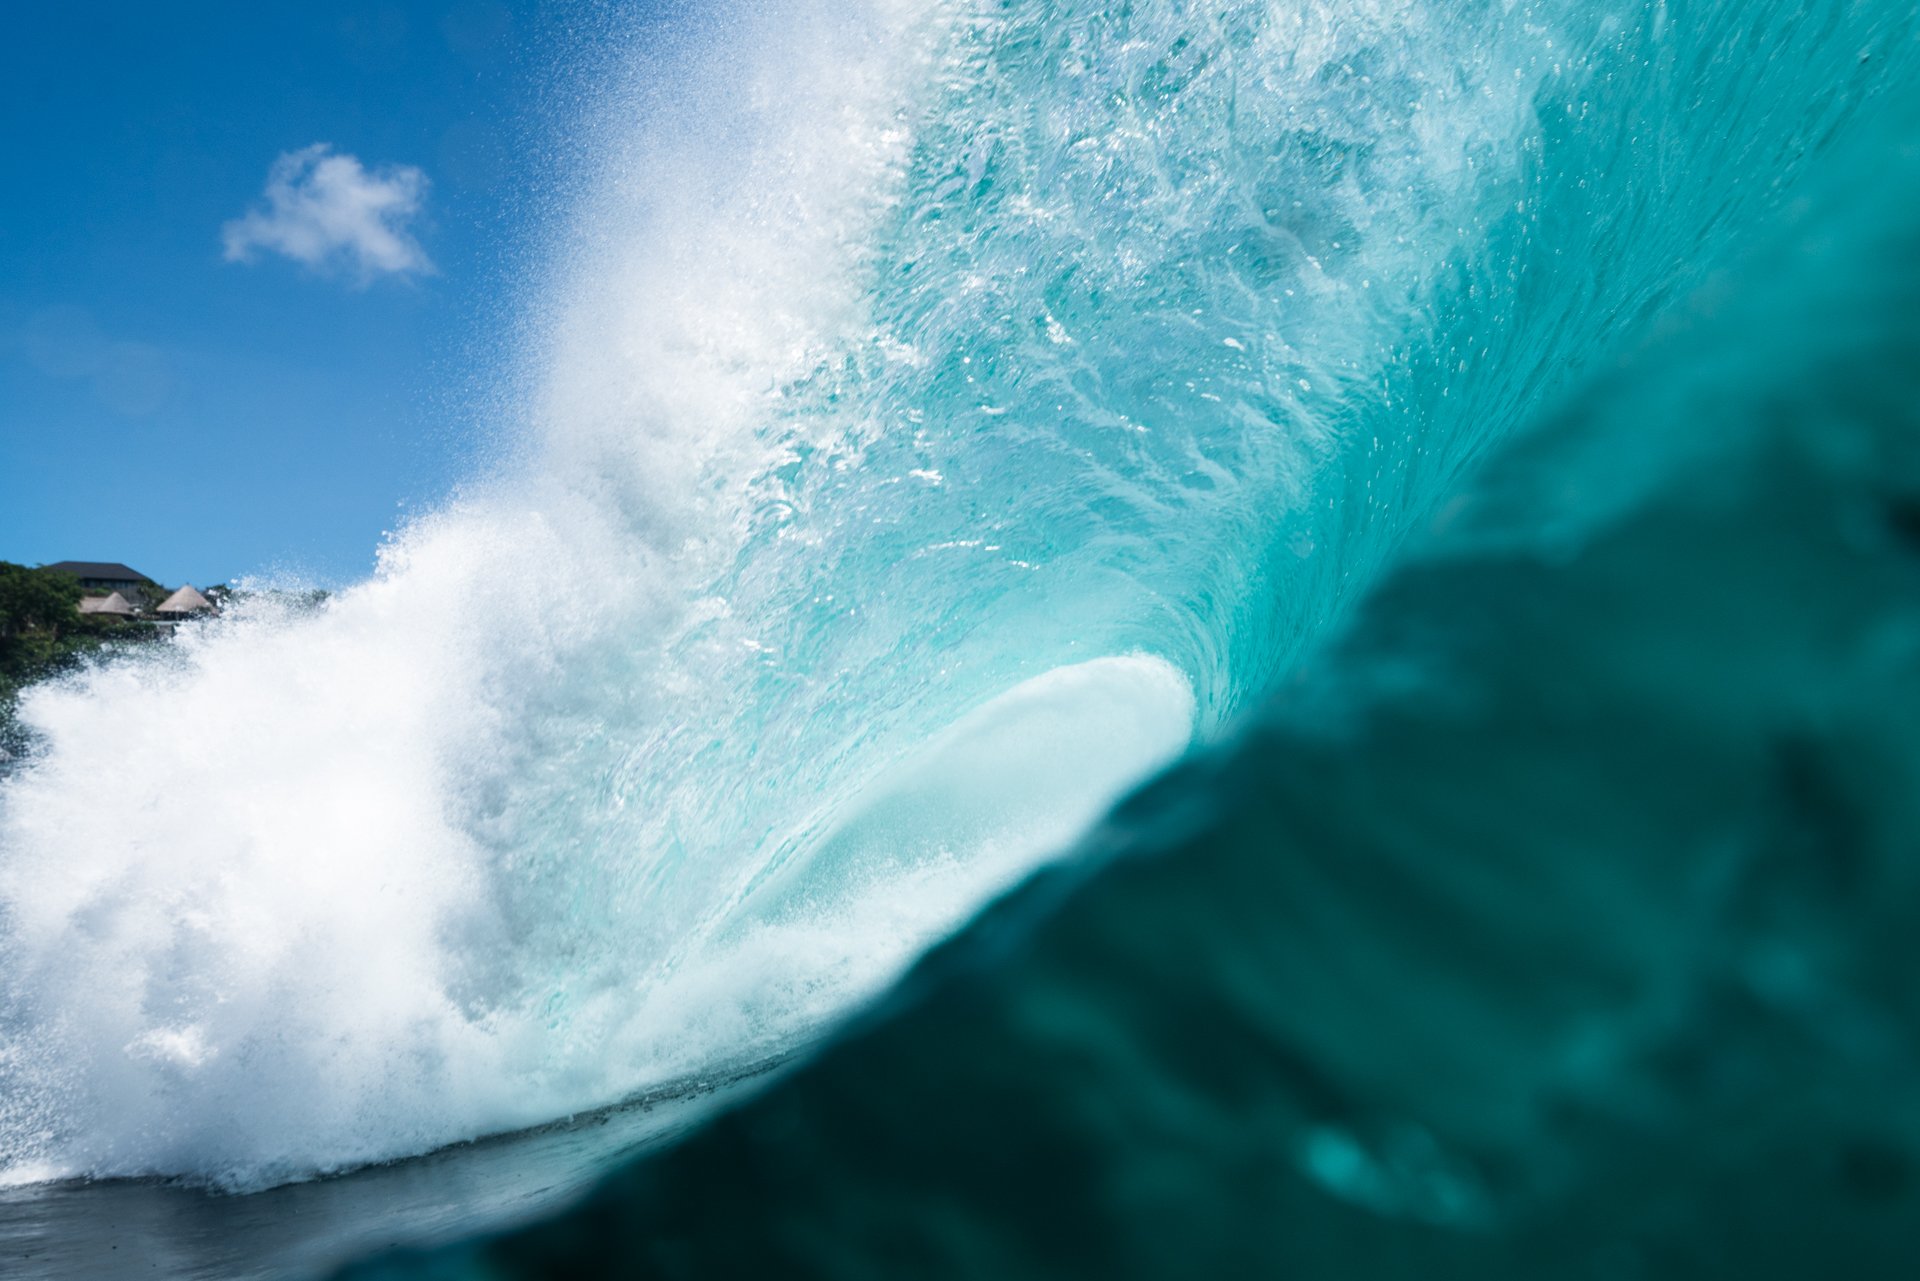 Crystal blue barrel wave photo by Matt Power